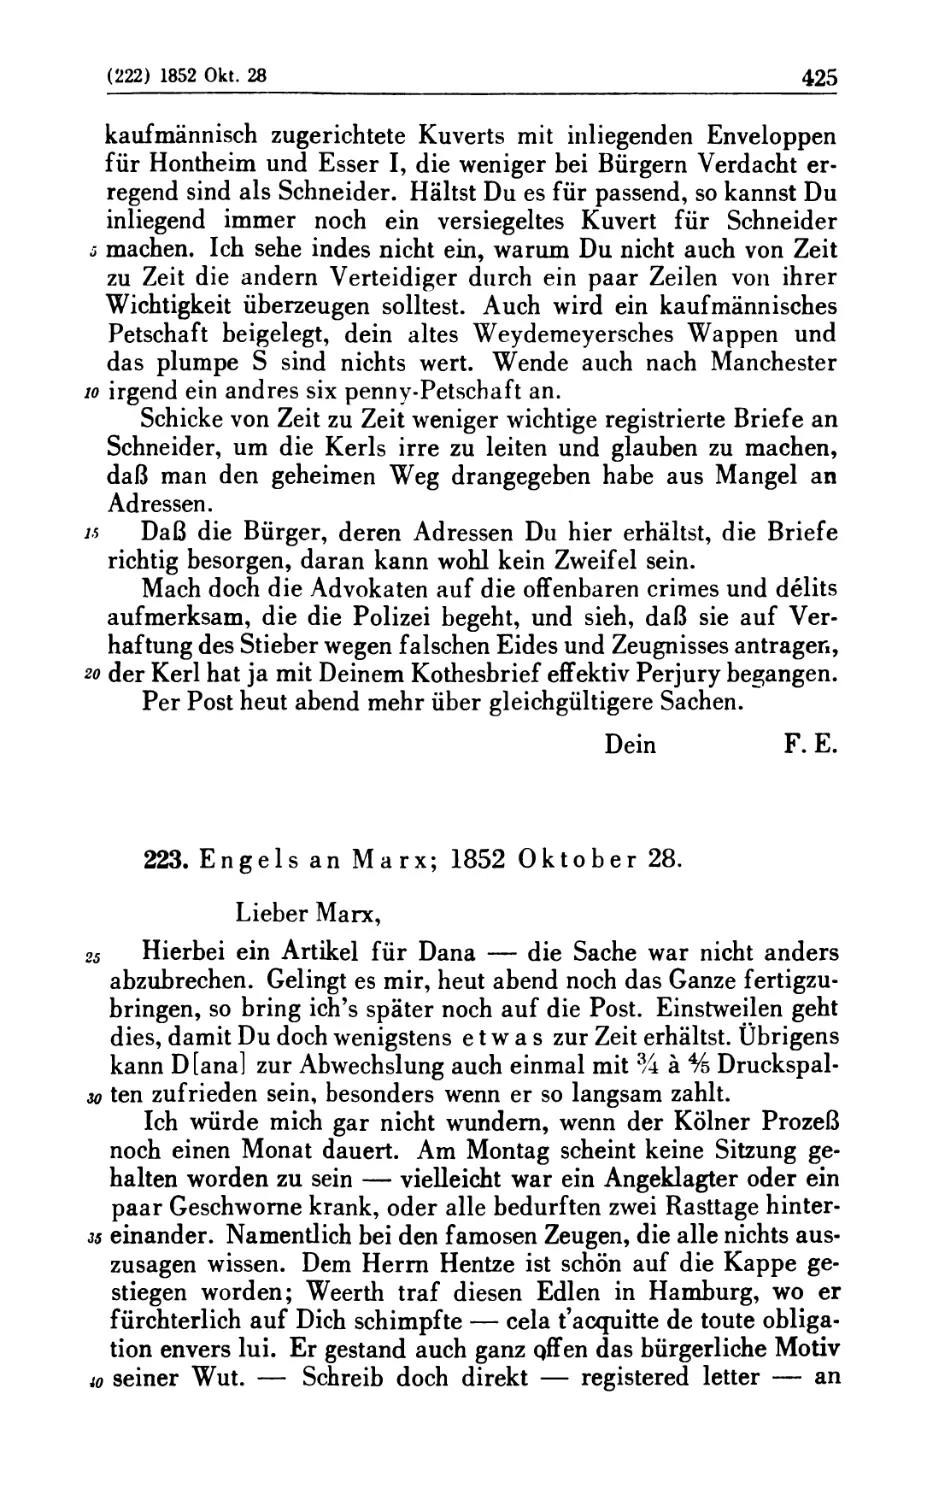 223. Engels an Marx; 1852 Oktober 28